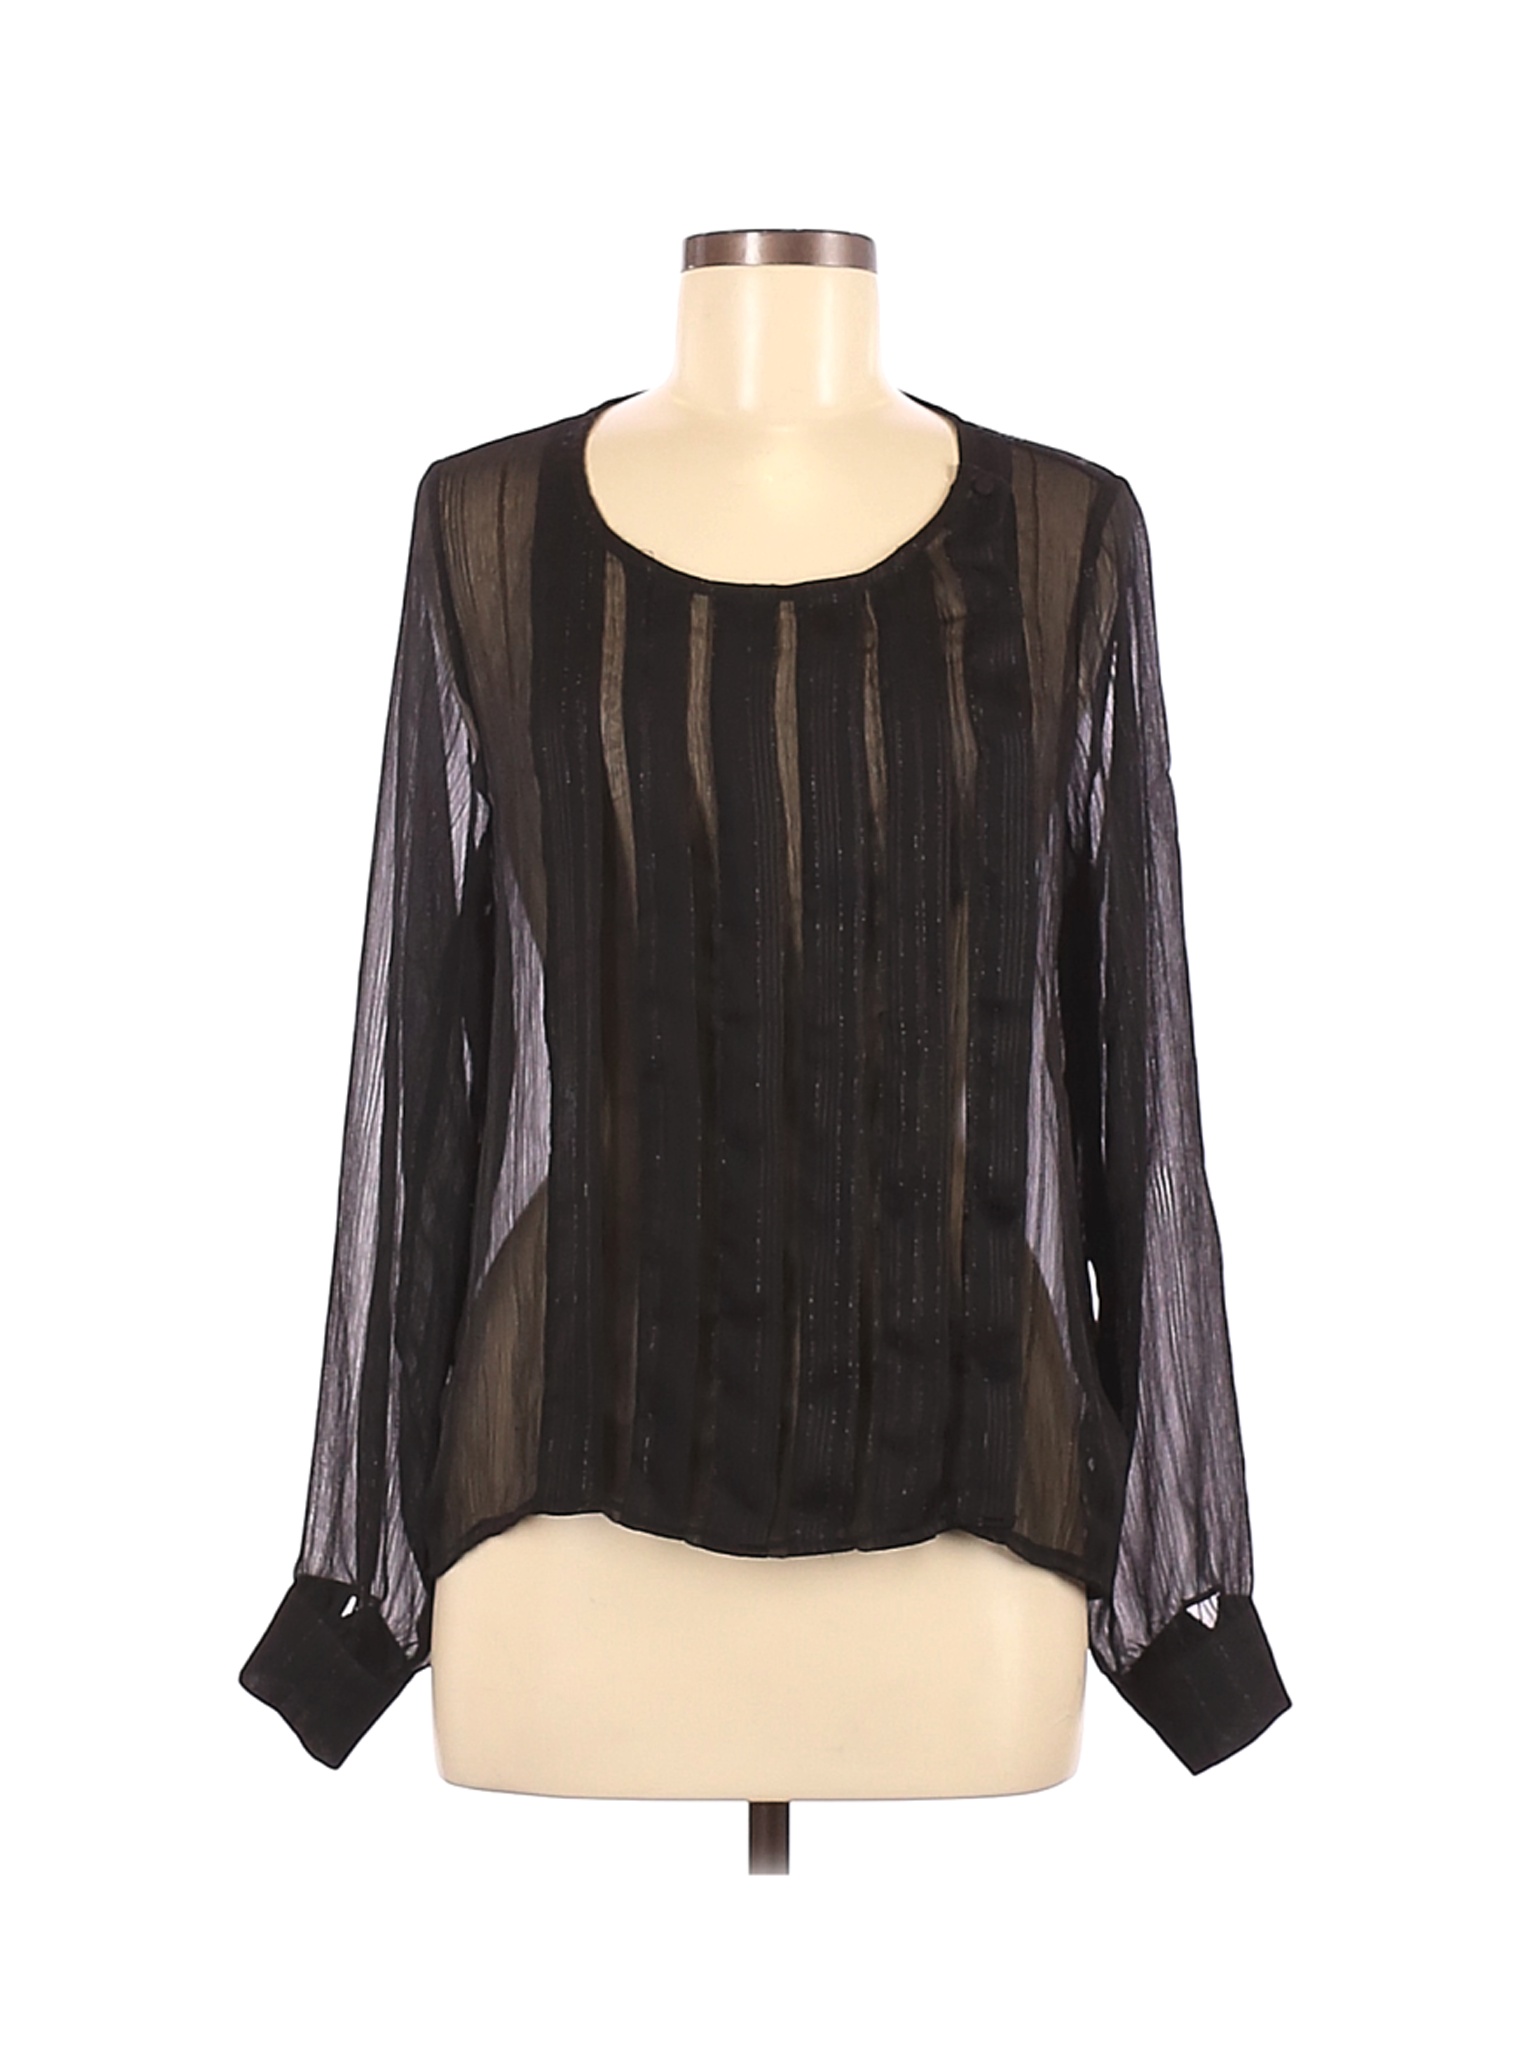 Rory Beca Women Black Long Sleeve Blouse M | eBay